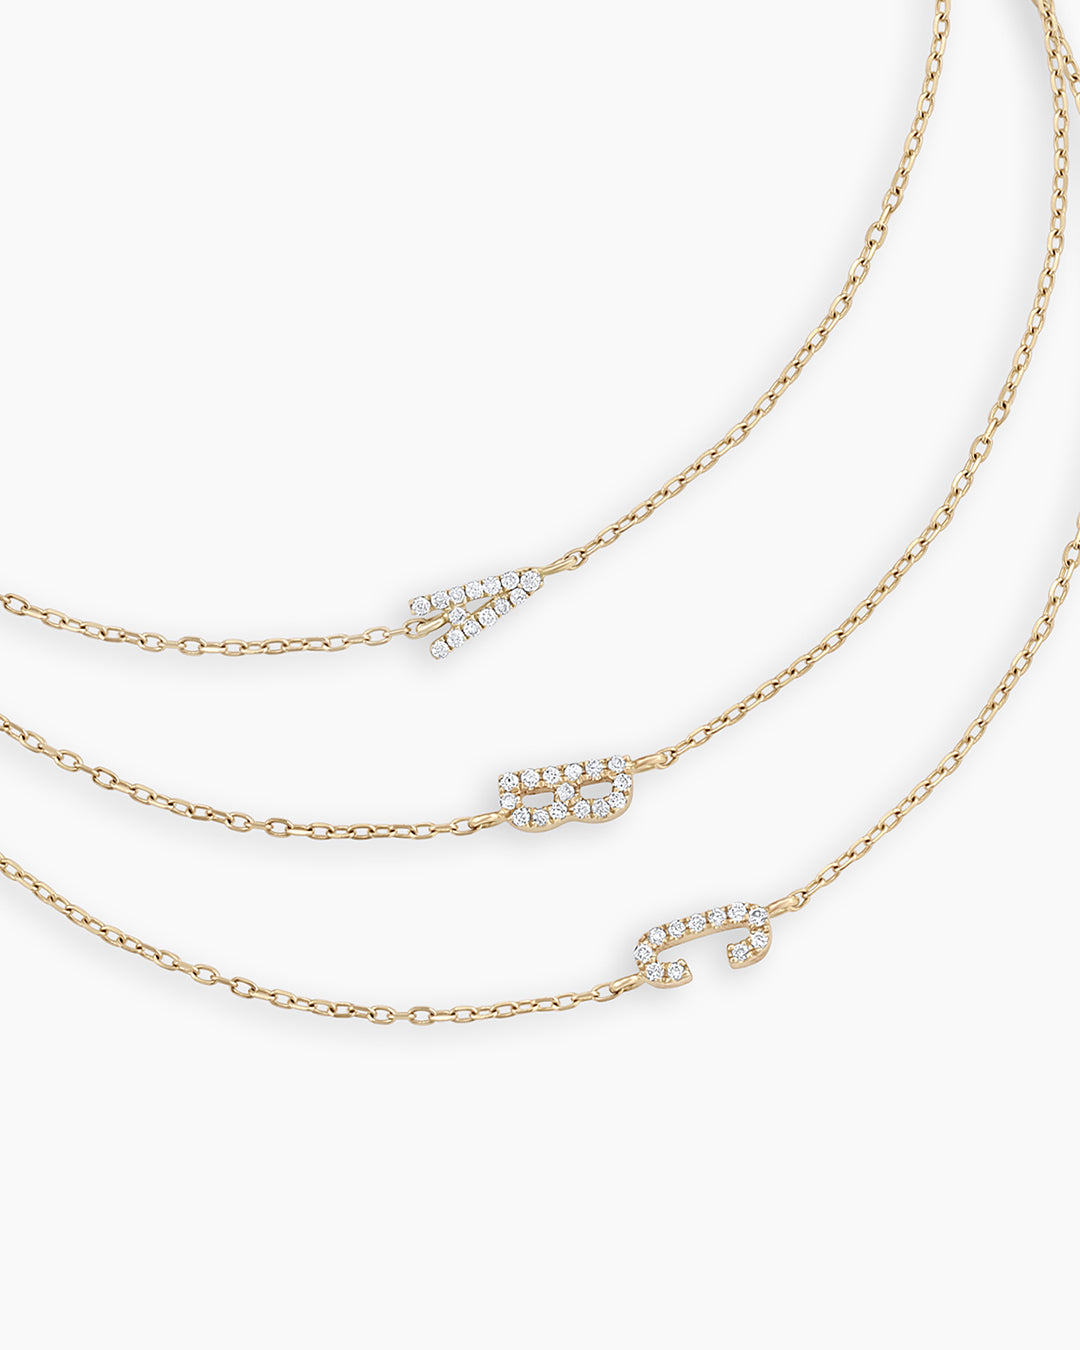 Floating Diamond Necklace in 18K Solid Gold, Women's by Gorjana